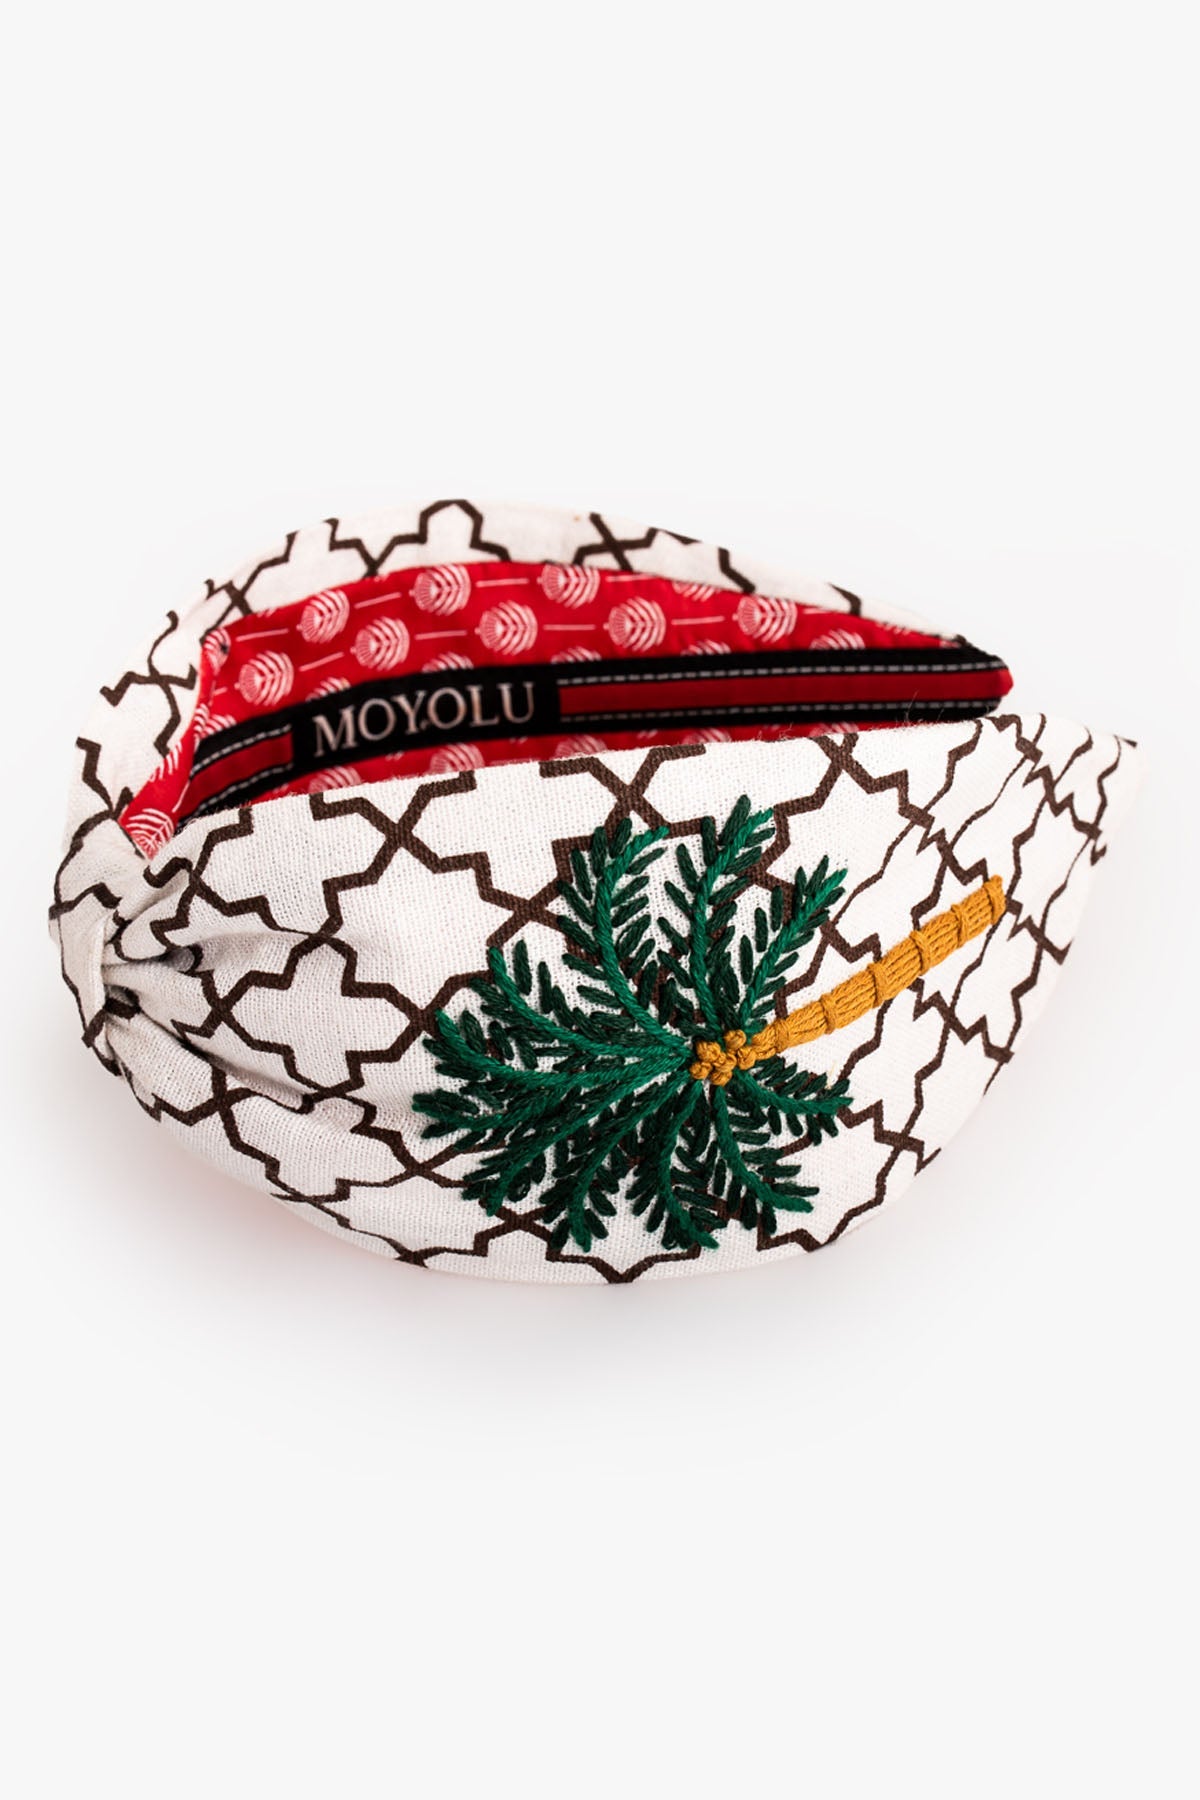 Moyolu White Tree Design Headband Accessories online at ScrollnShops